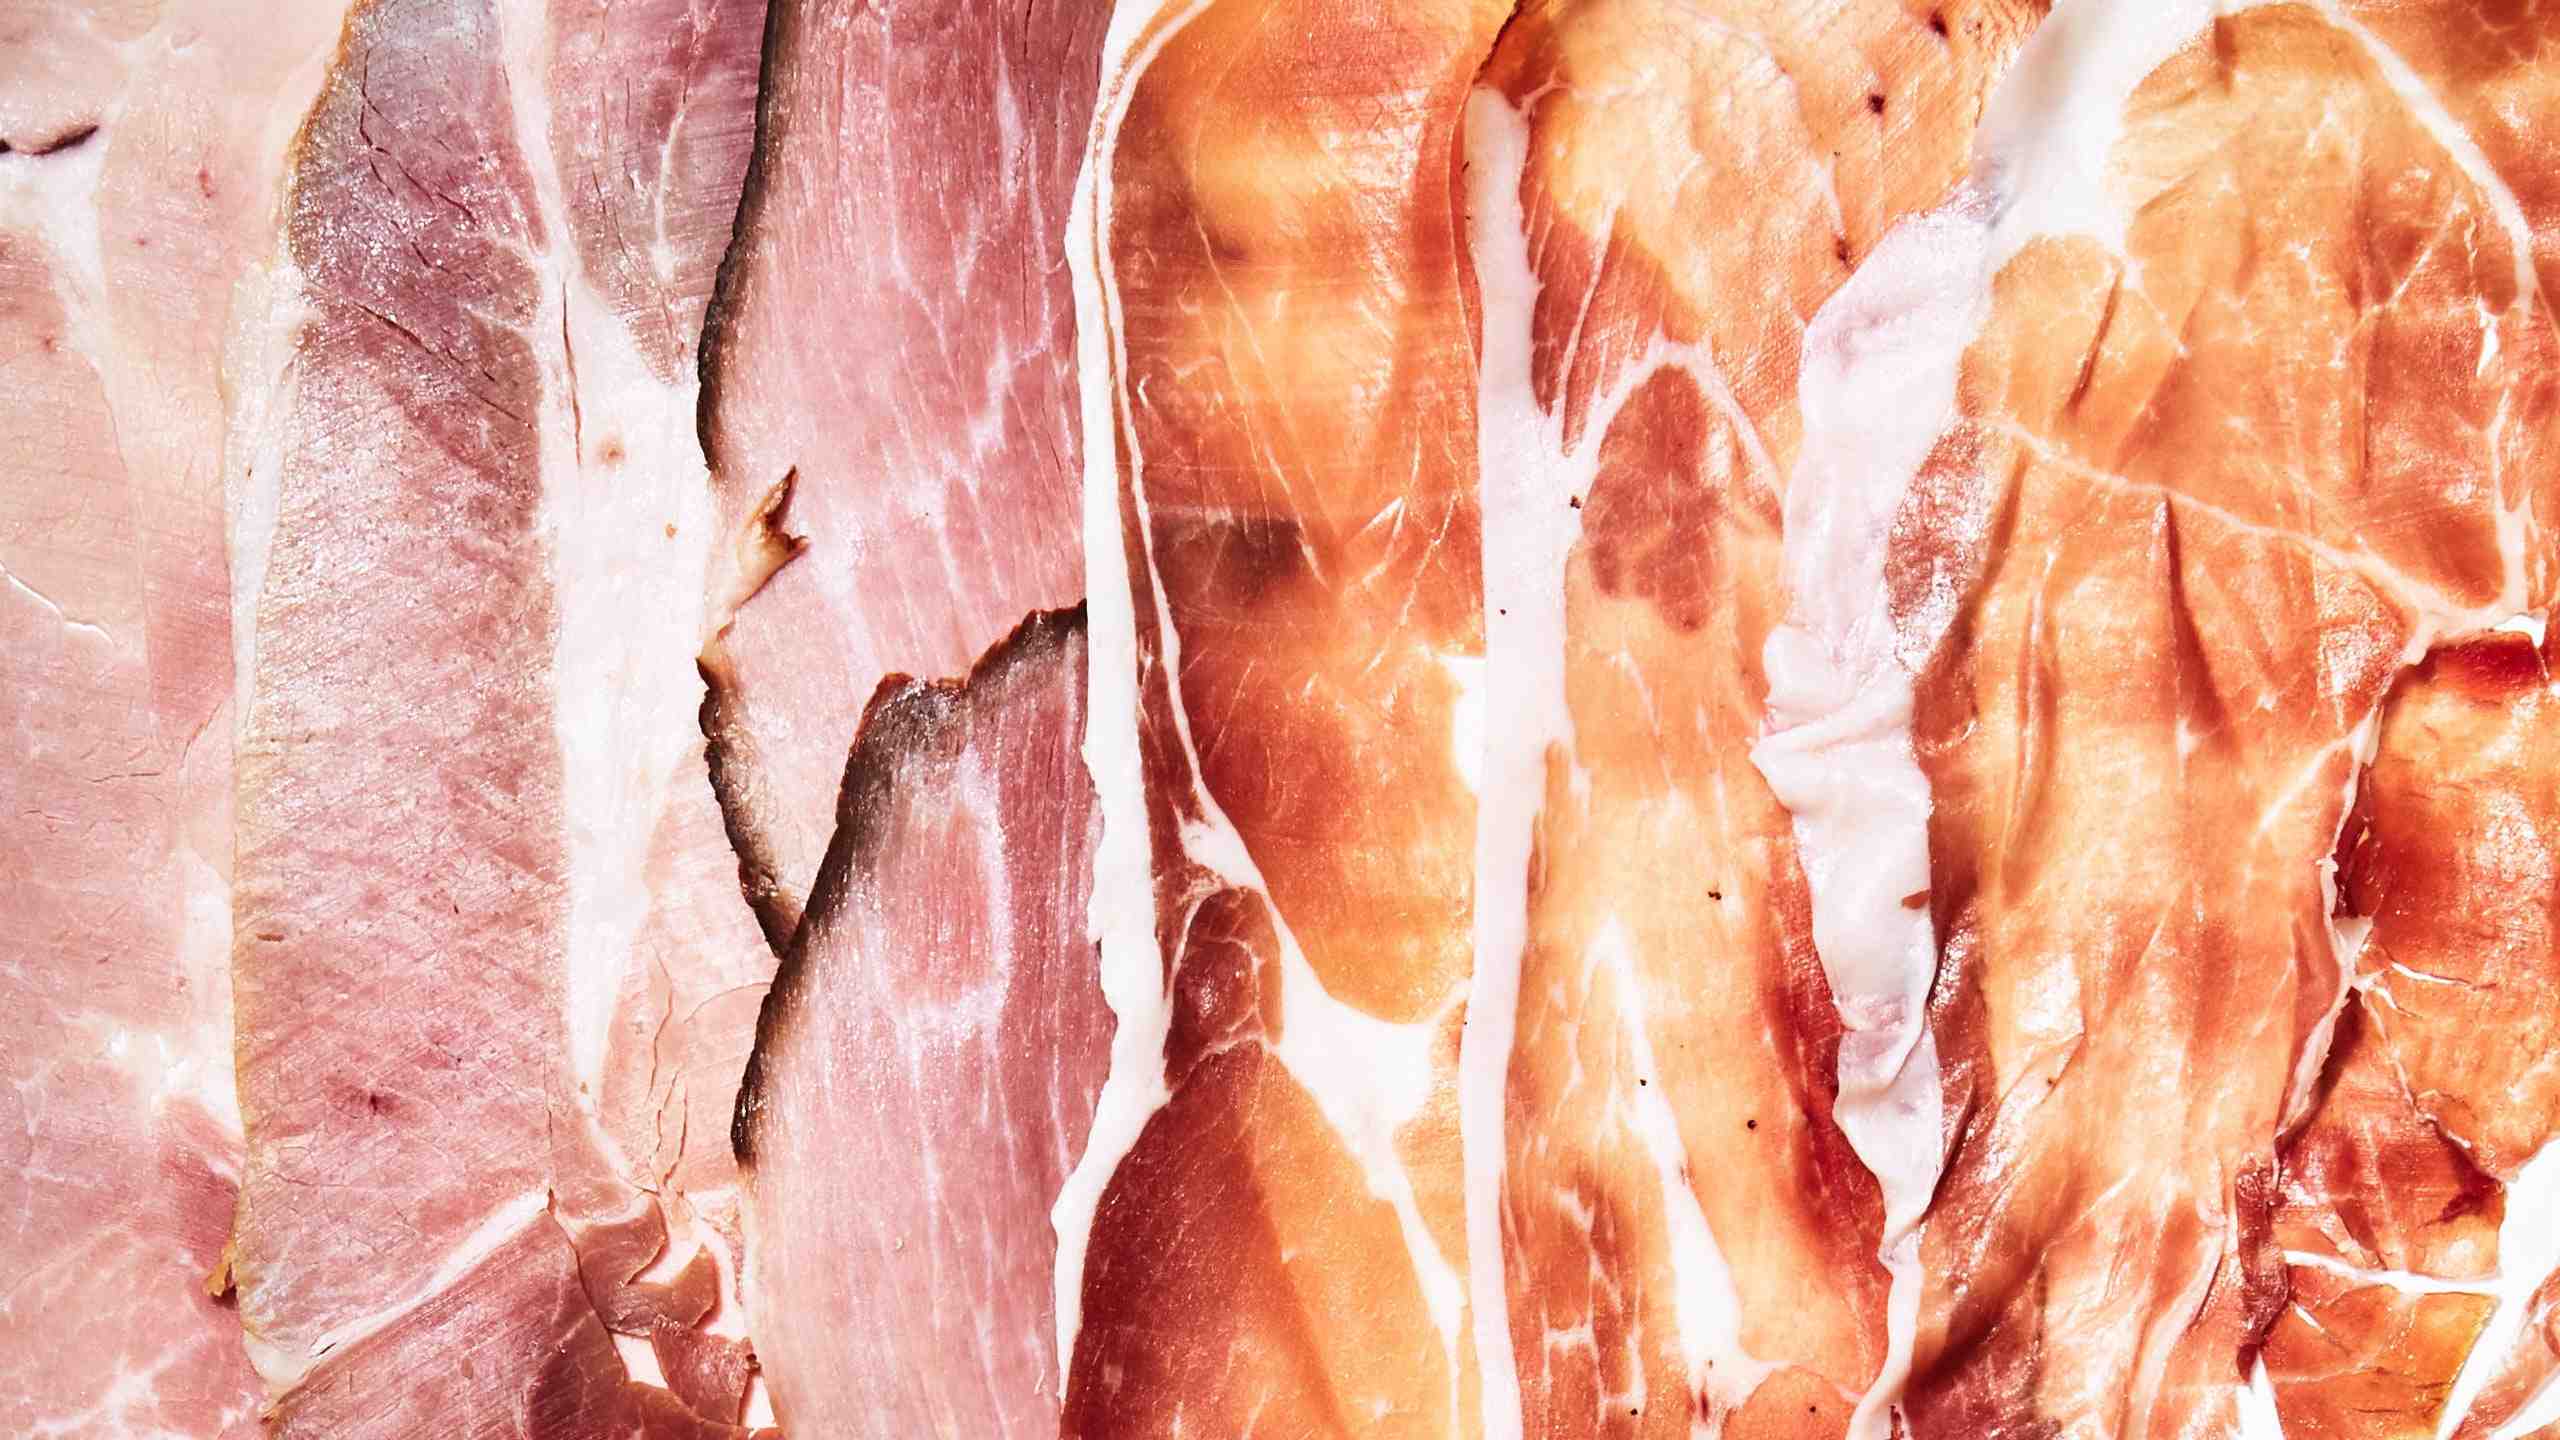 Why does ham taste different than pork?